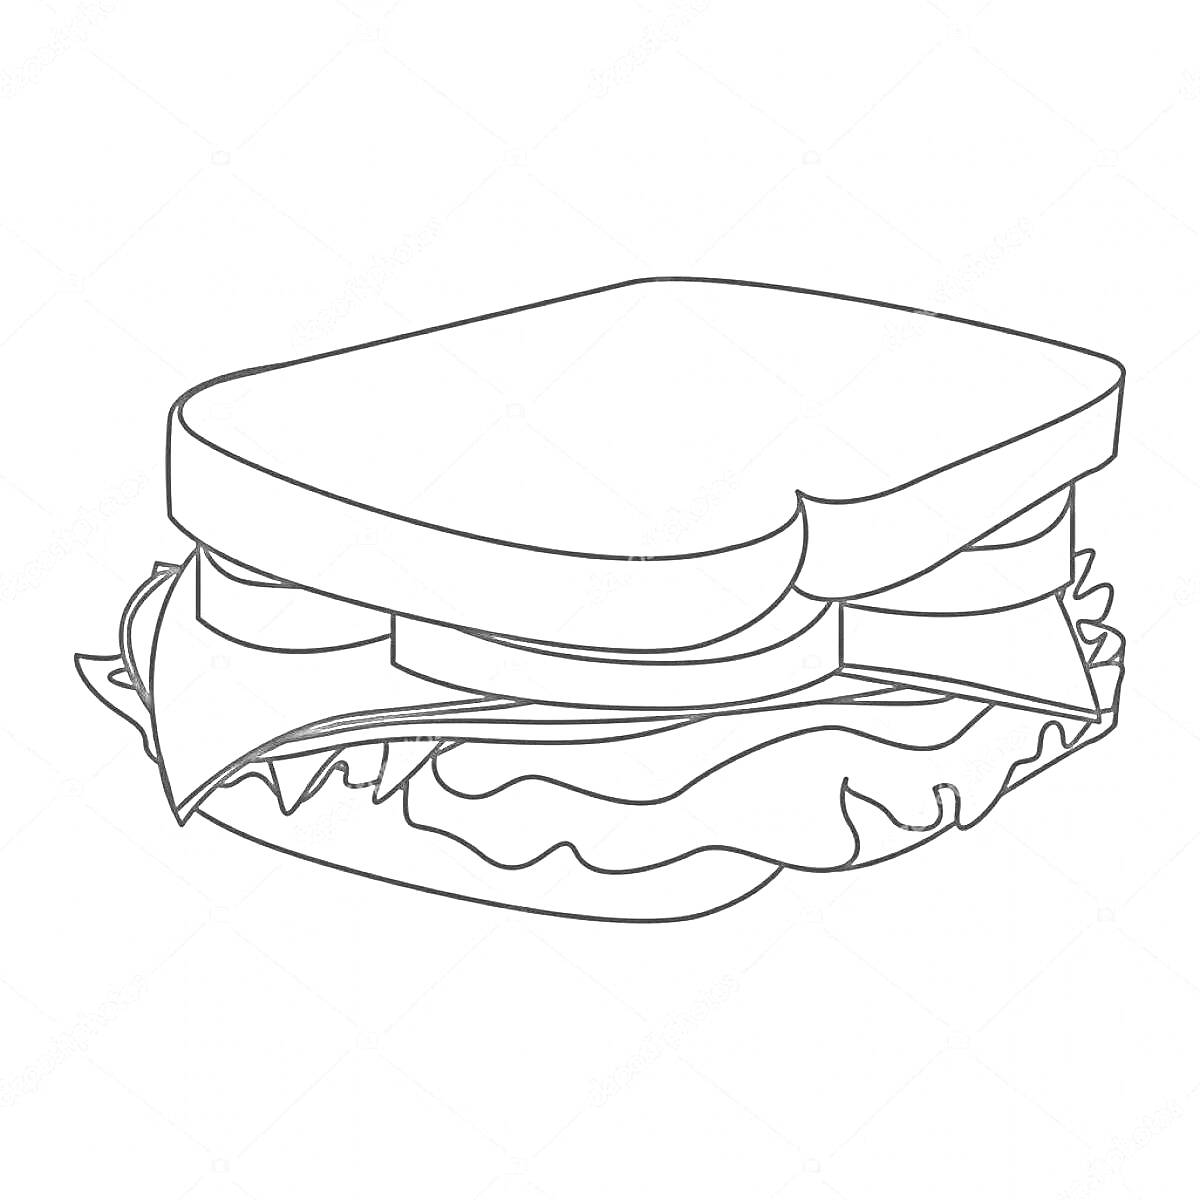 На раскраске изображено: Сэндвич, Еда, Листья салата, Сыр, Мясо, Бутерброд